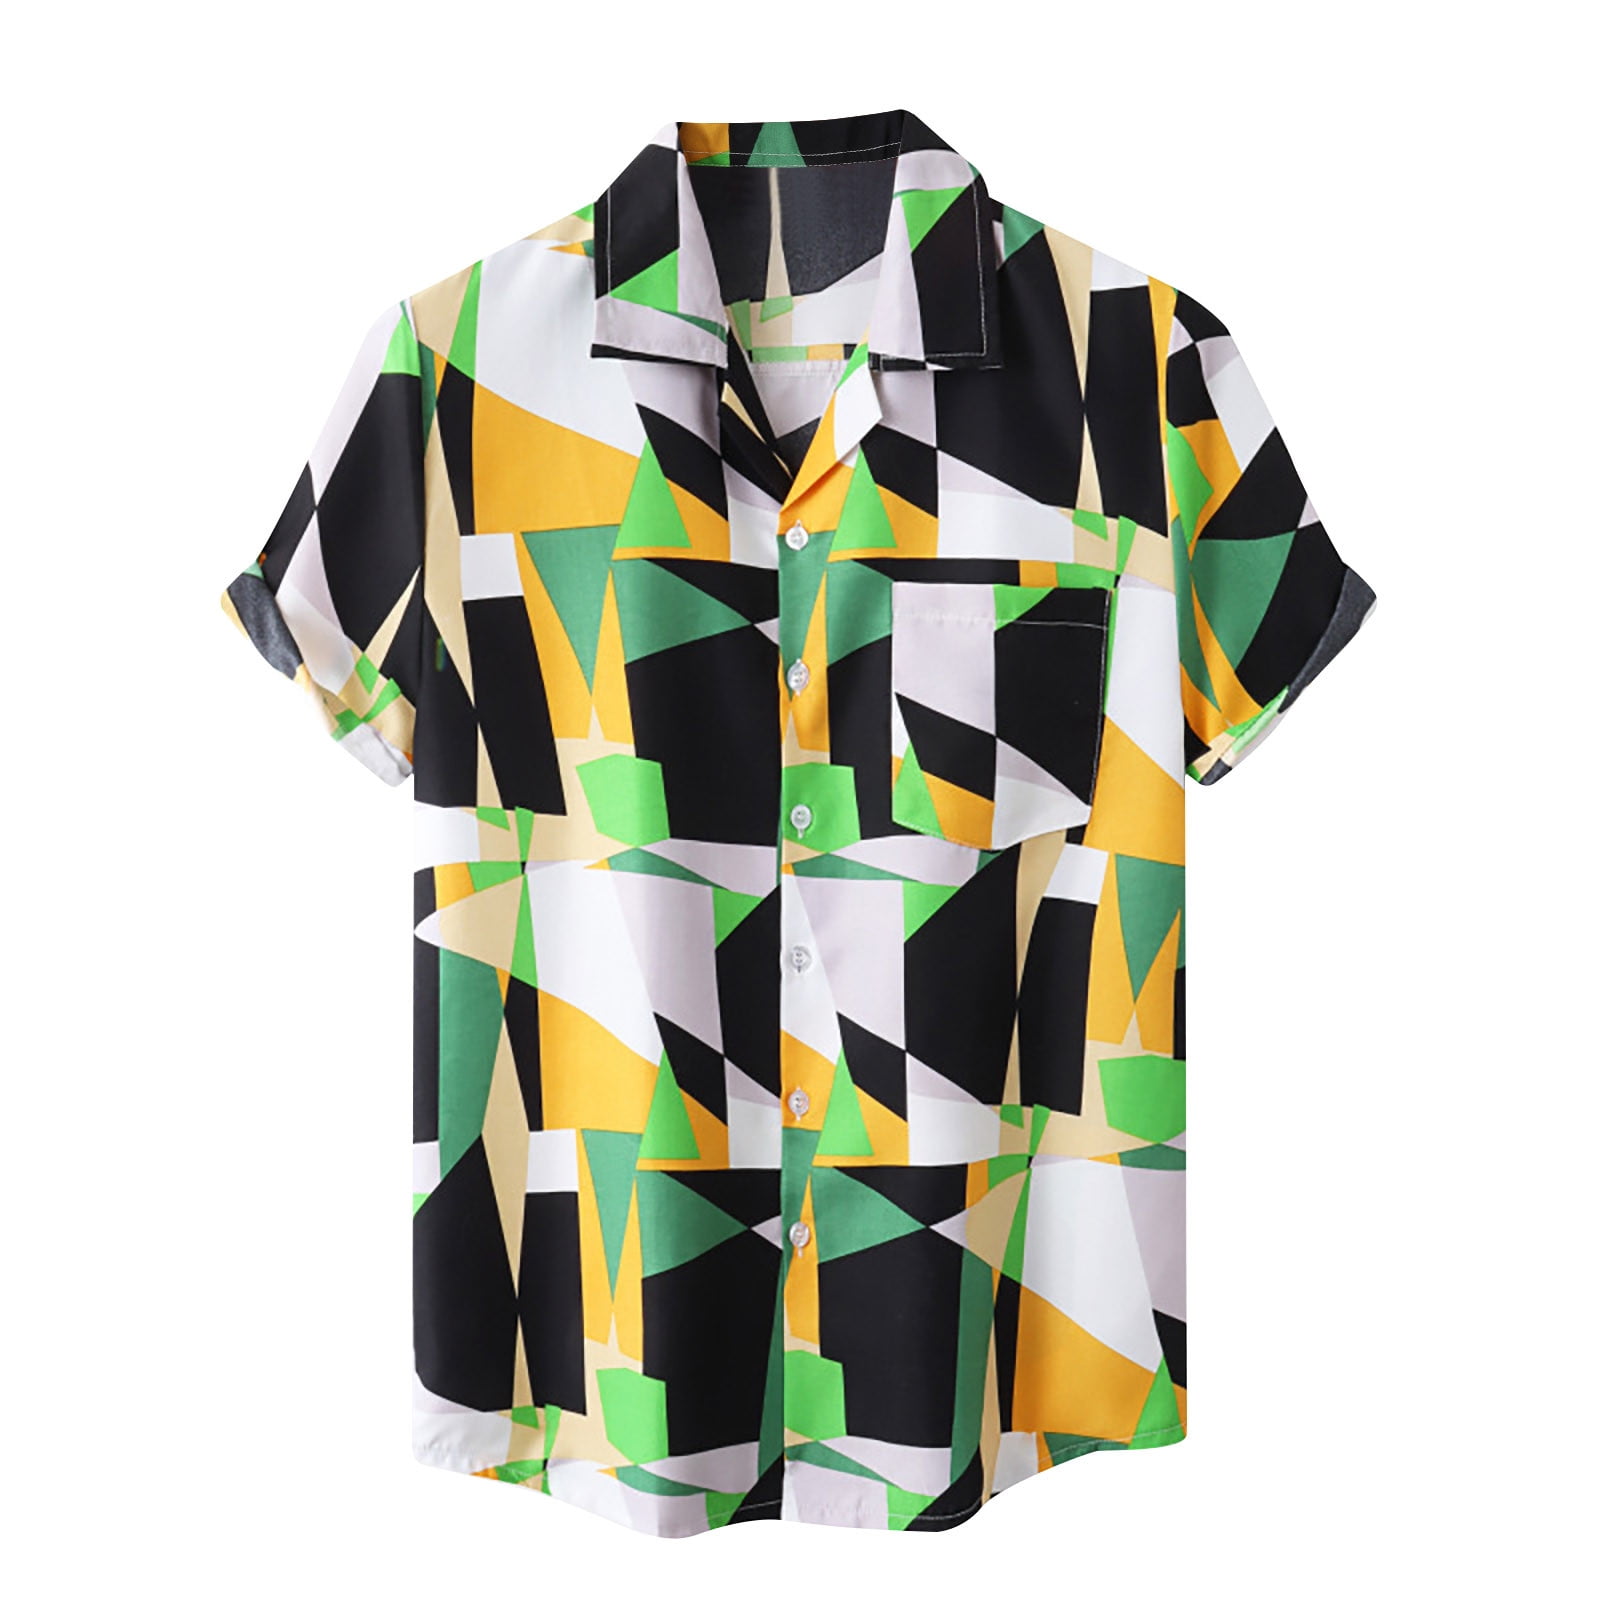 VSSSJ Men's Hawaiian Shirts Oversized Fit Casual Button Down Short Sleeve  Irregular Geometry Print Tshirt with Pocket Summer Holiday Party Beach Tee